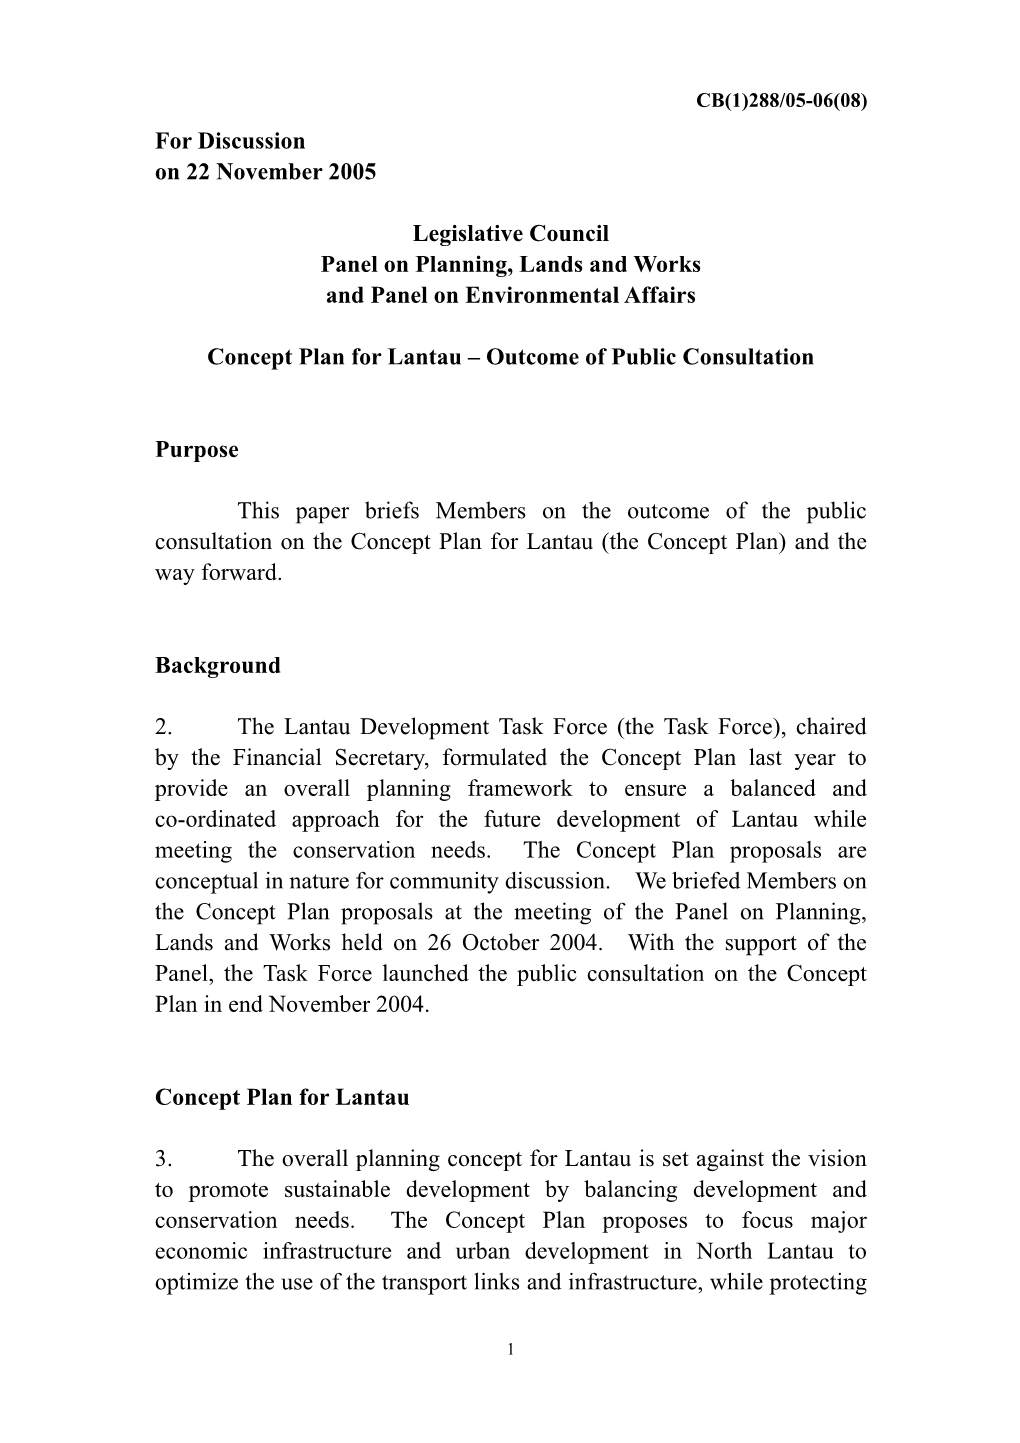 Concept Plan for Lantau – Outcome of Public Consultation